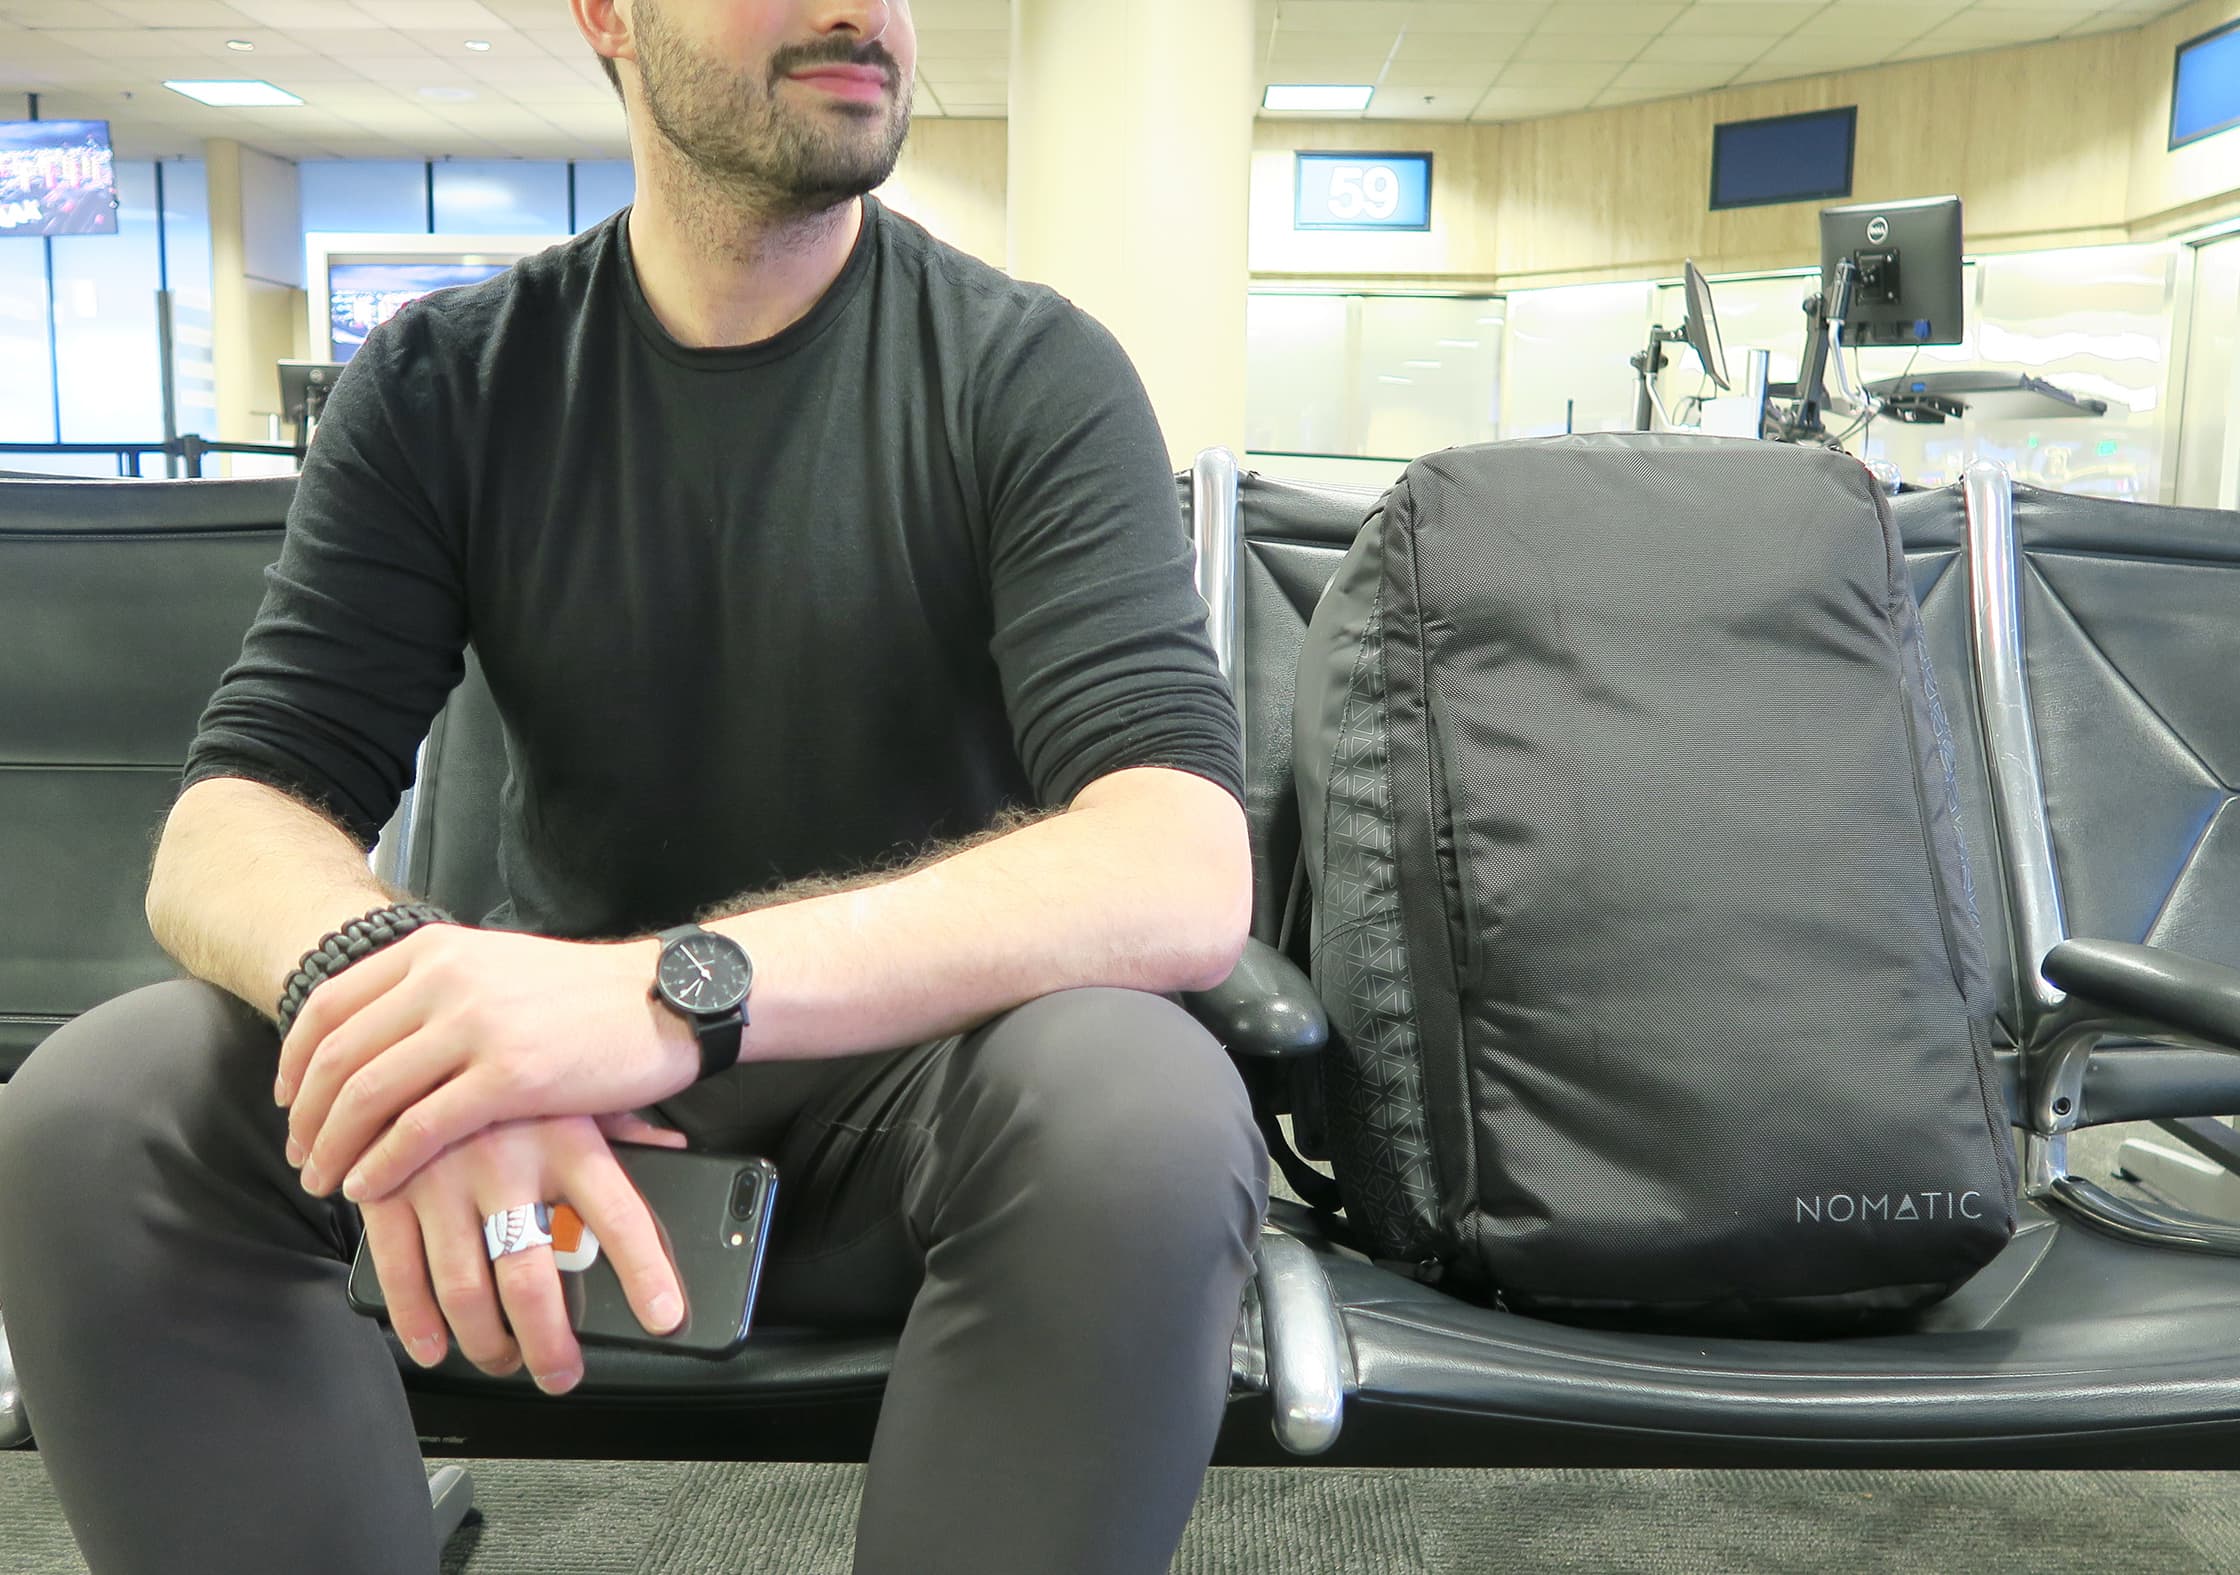 NOMATIC Travel Bag At Airport